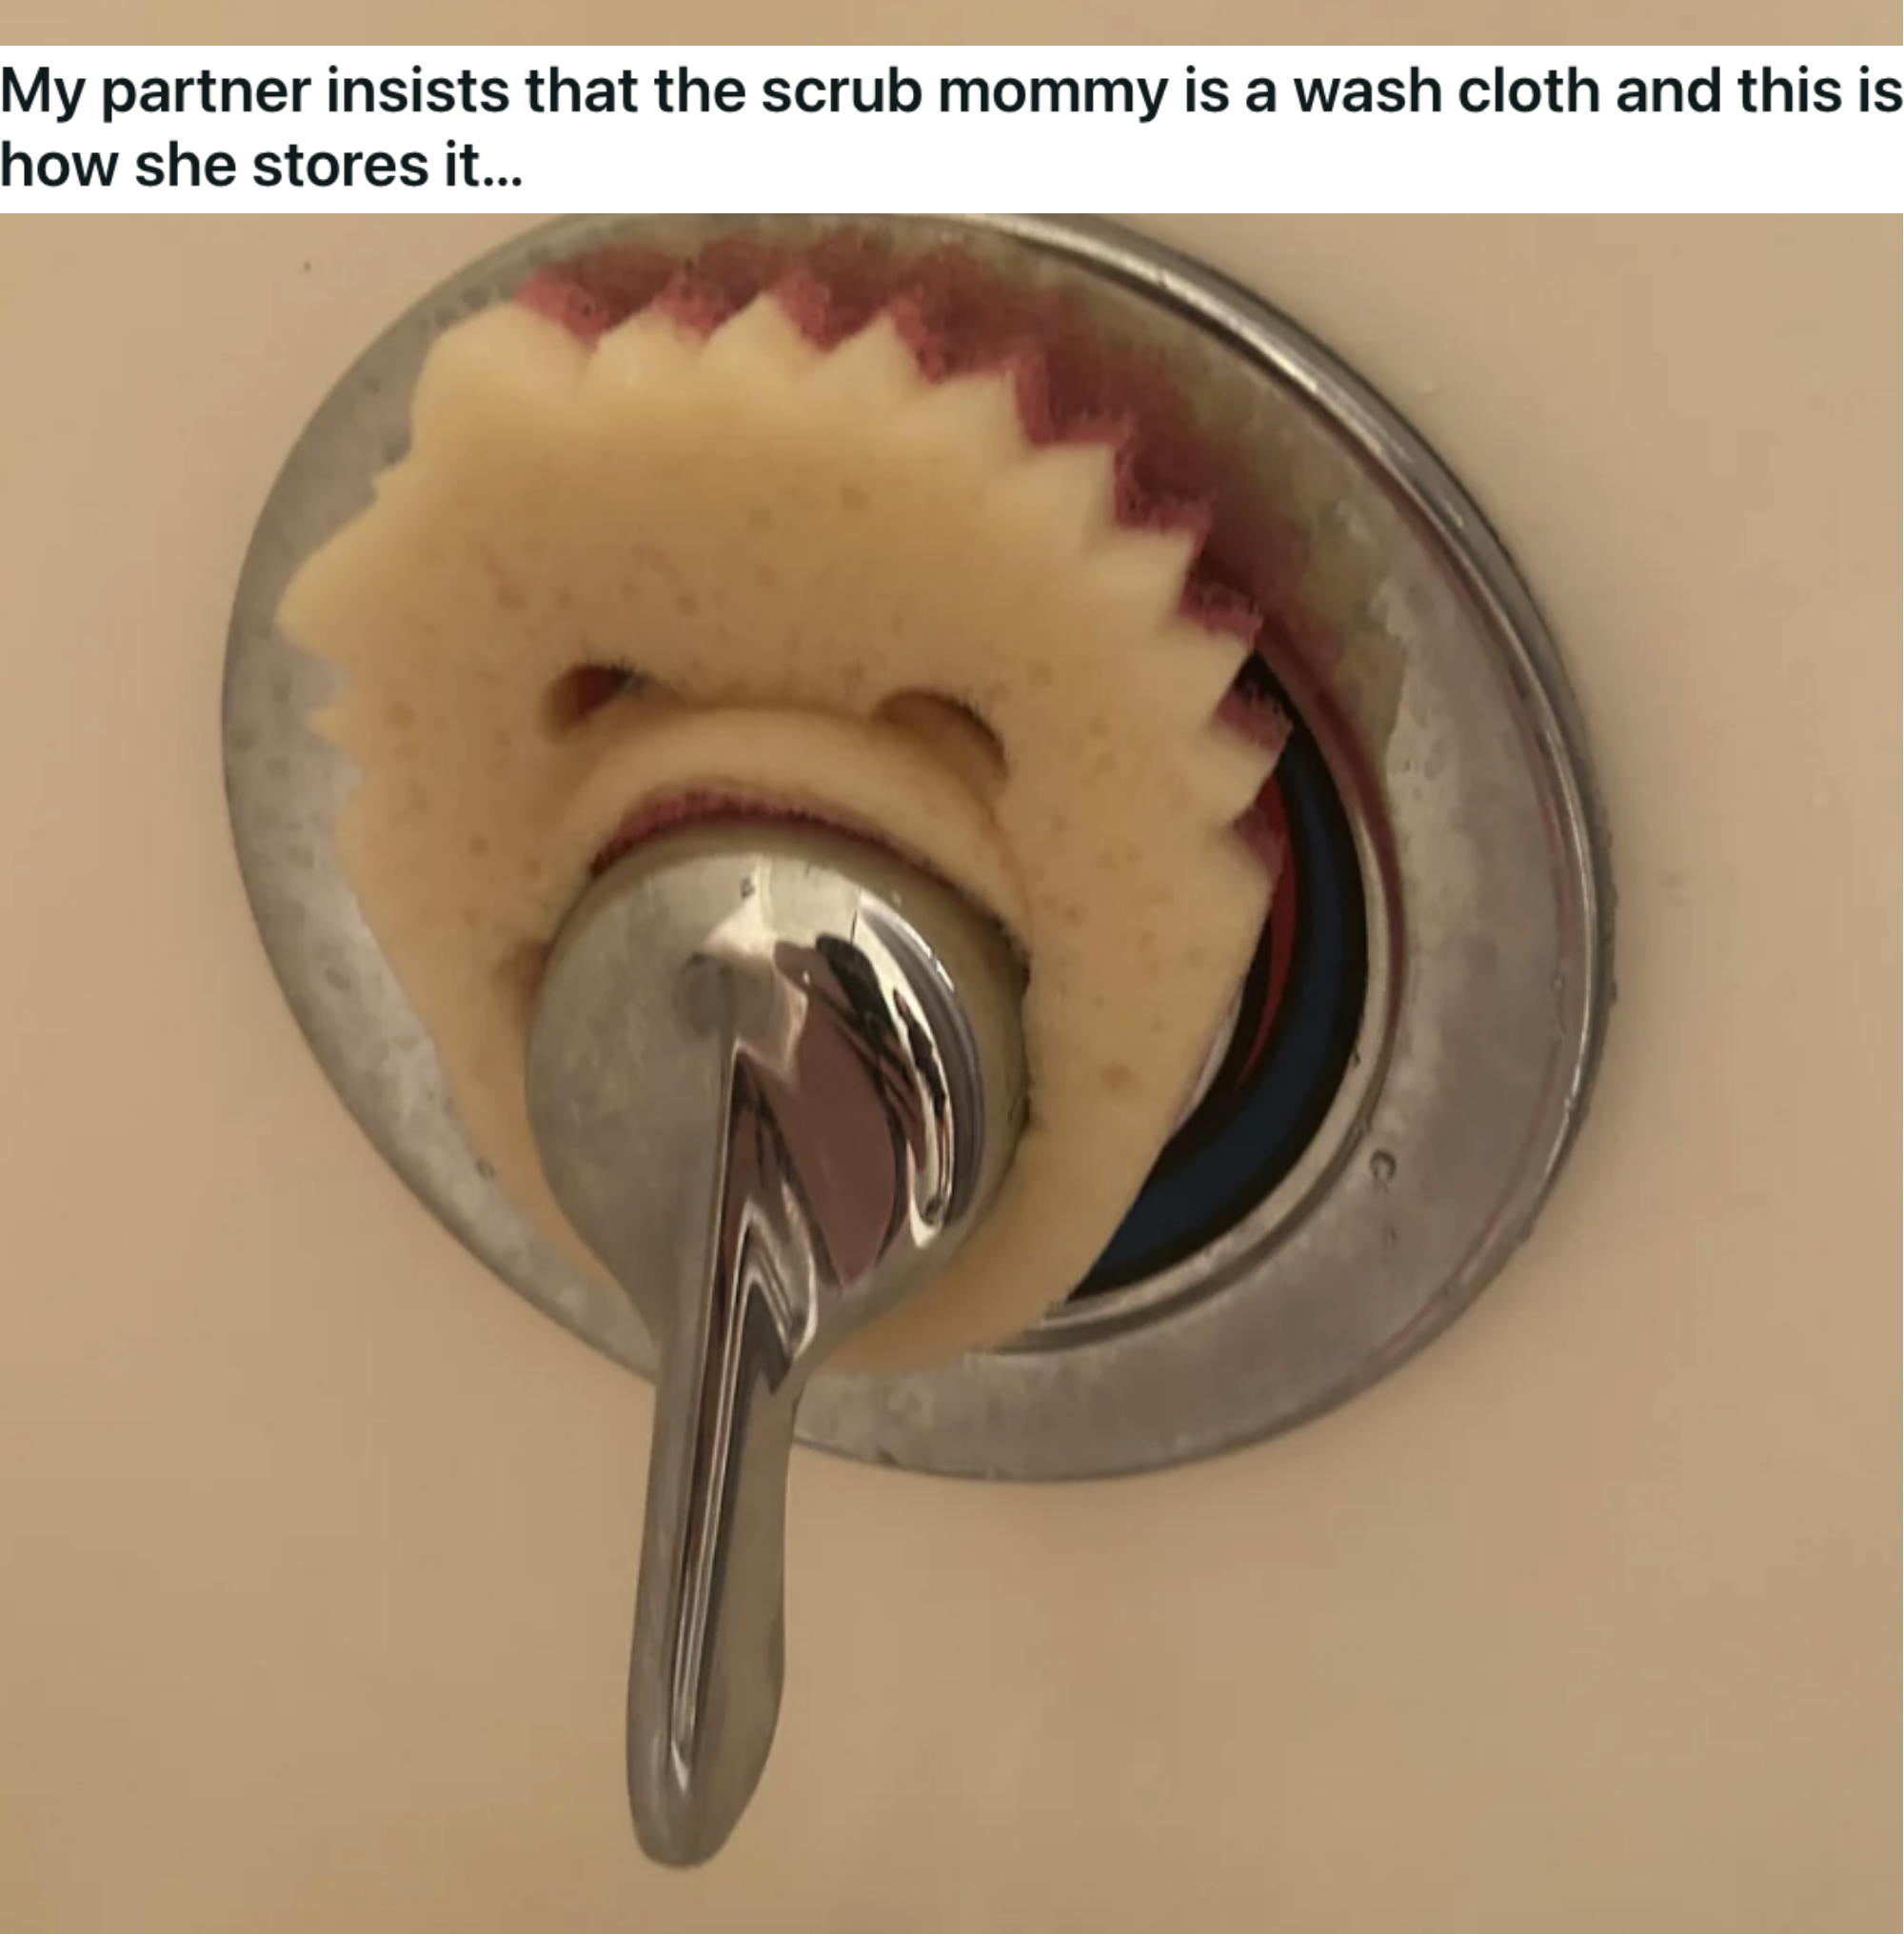 a sponge stuck in a shower handle